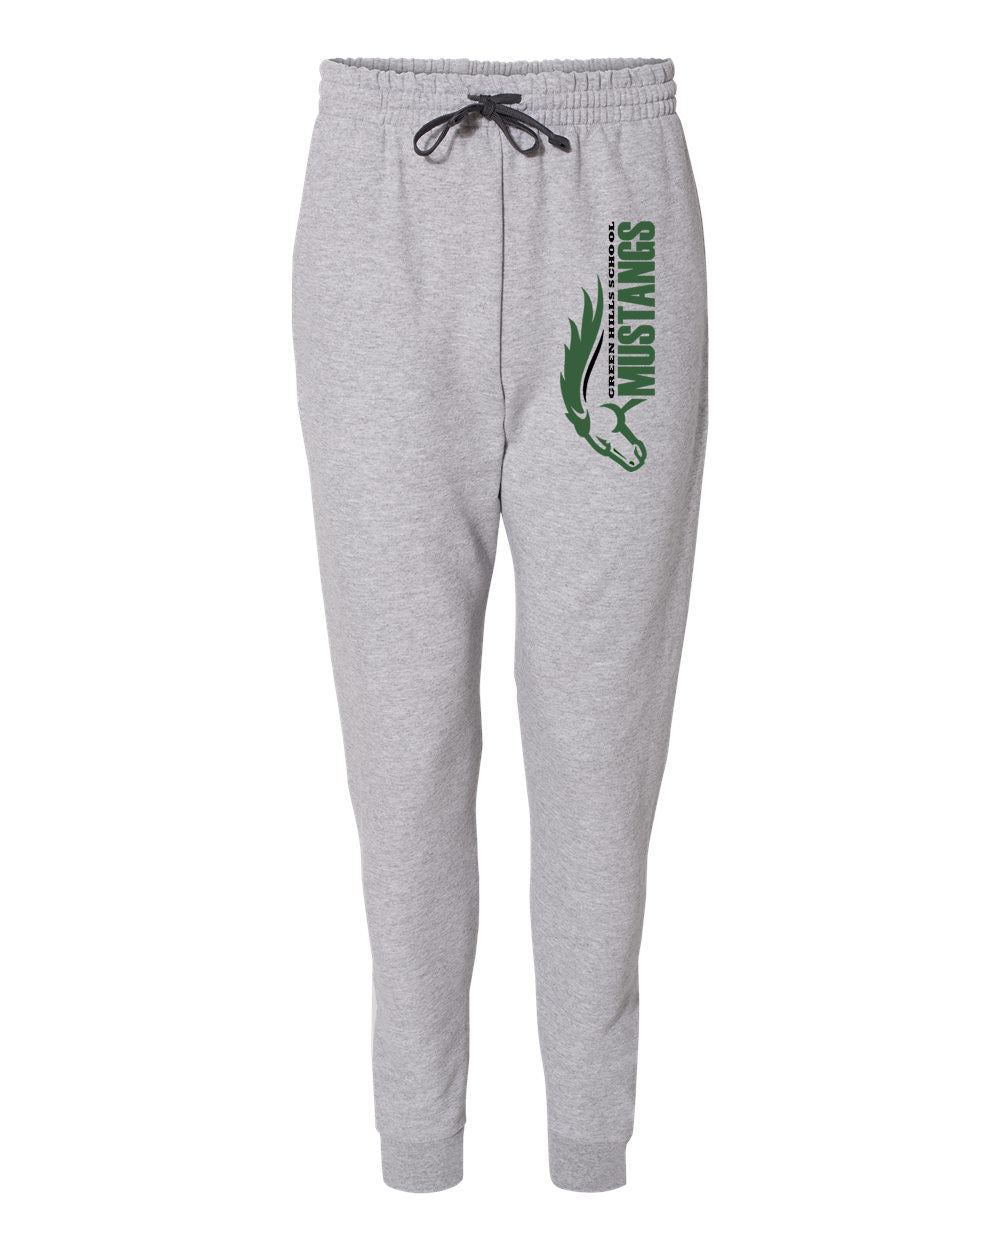 Green Hills design 4 Sweatpants